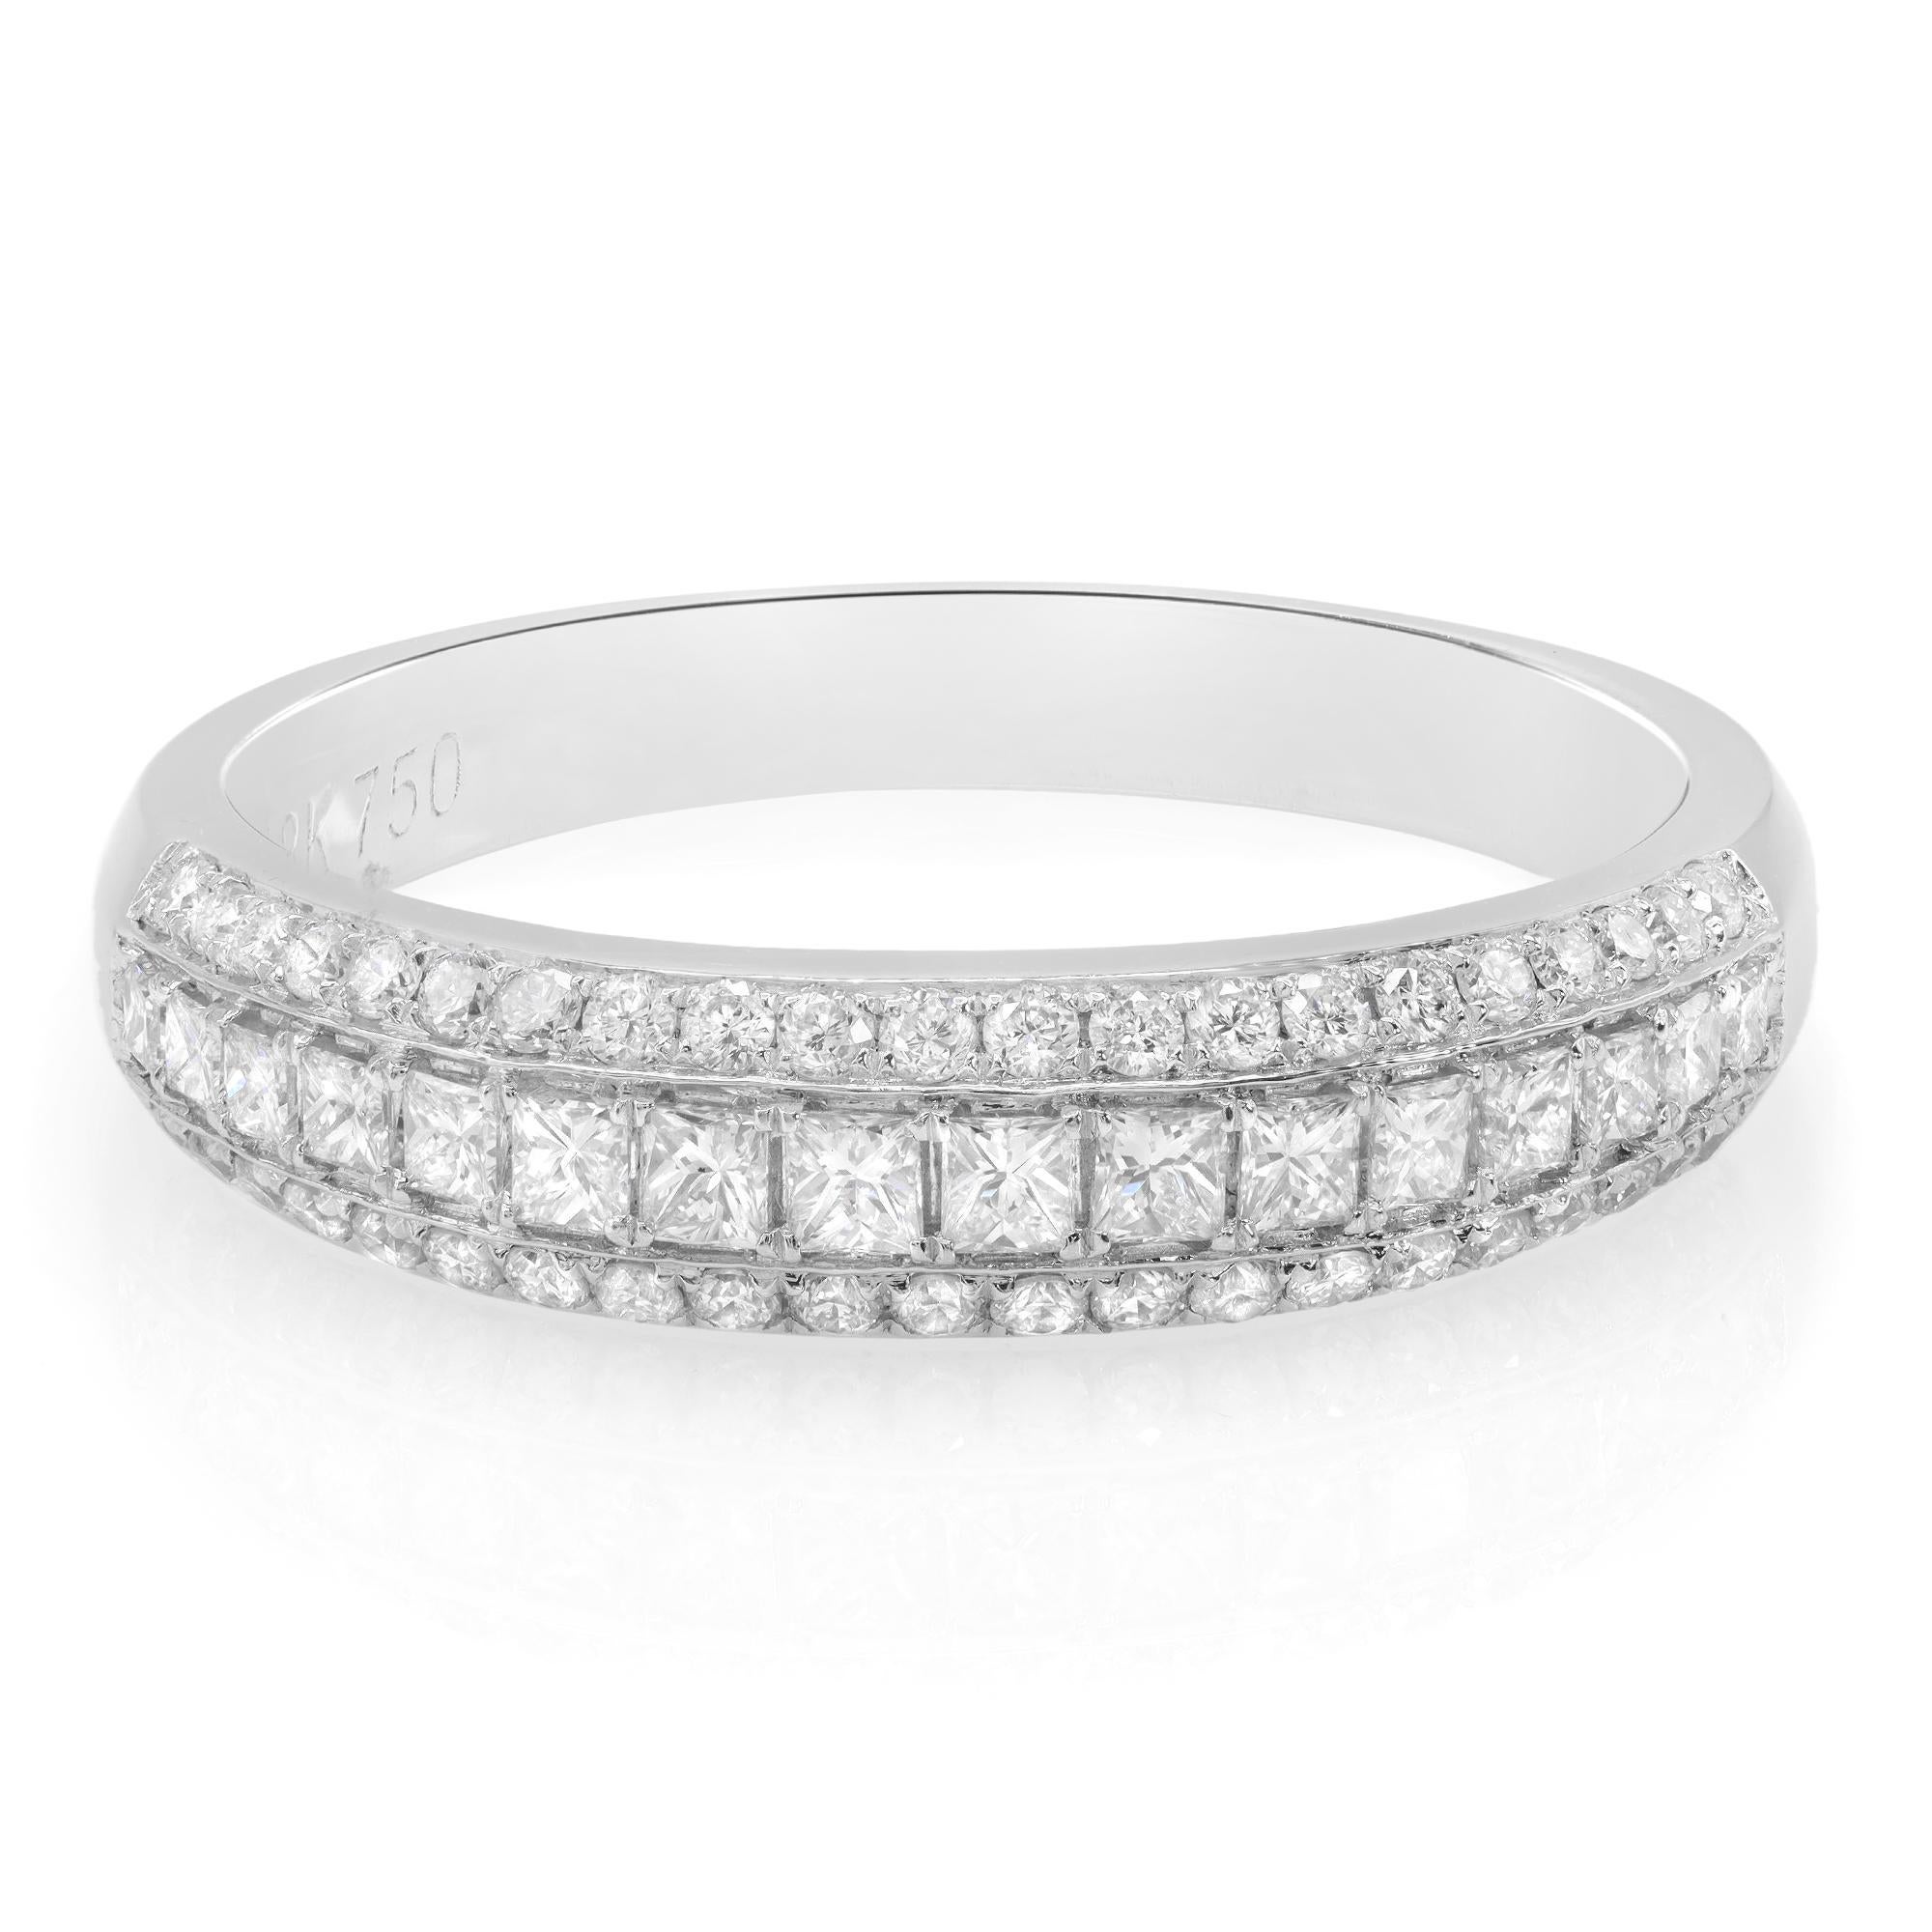 Rachel Koen Princess and Round Diamond Wedding Band Ring 18k White Gold 0.67cttw For Sale